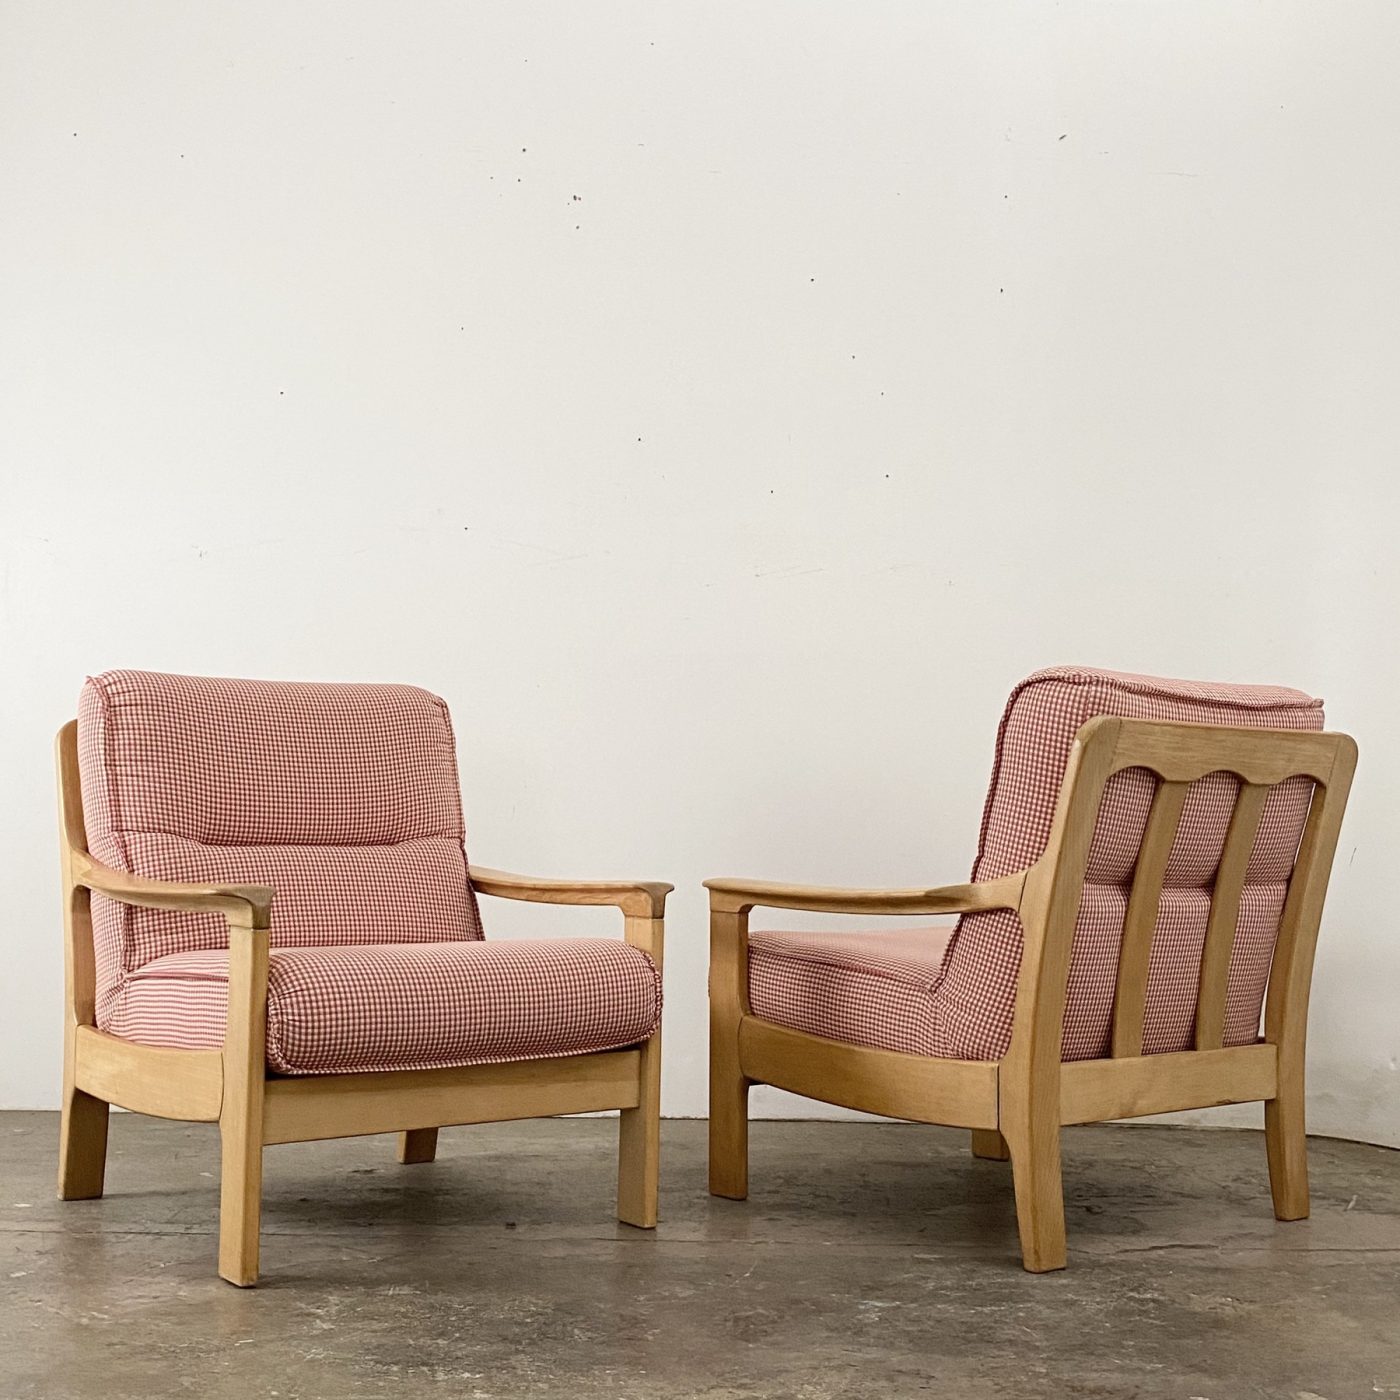 objet-vagabond-vintage-armchairs0004